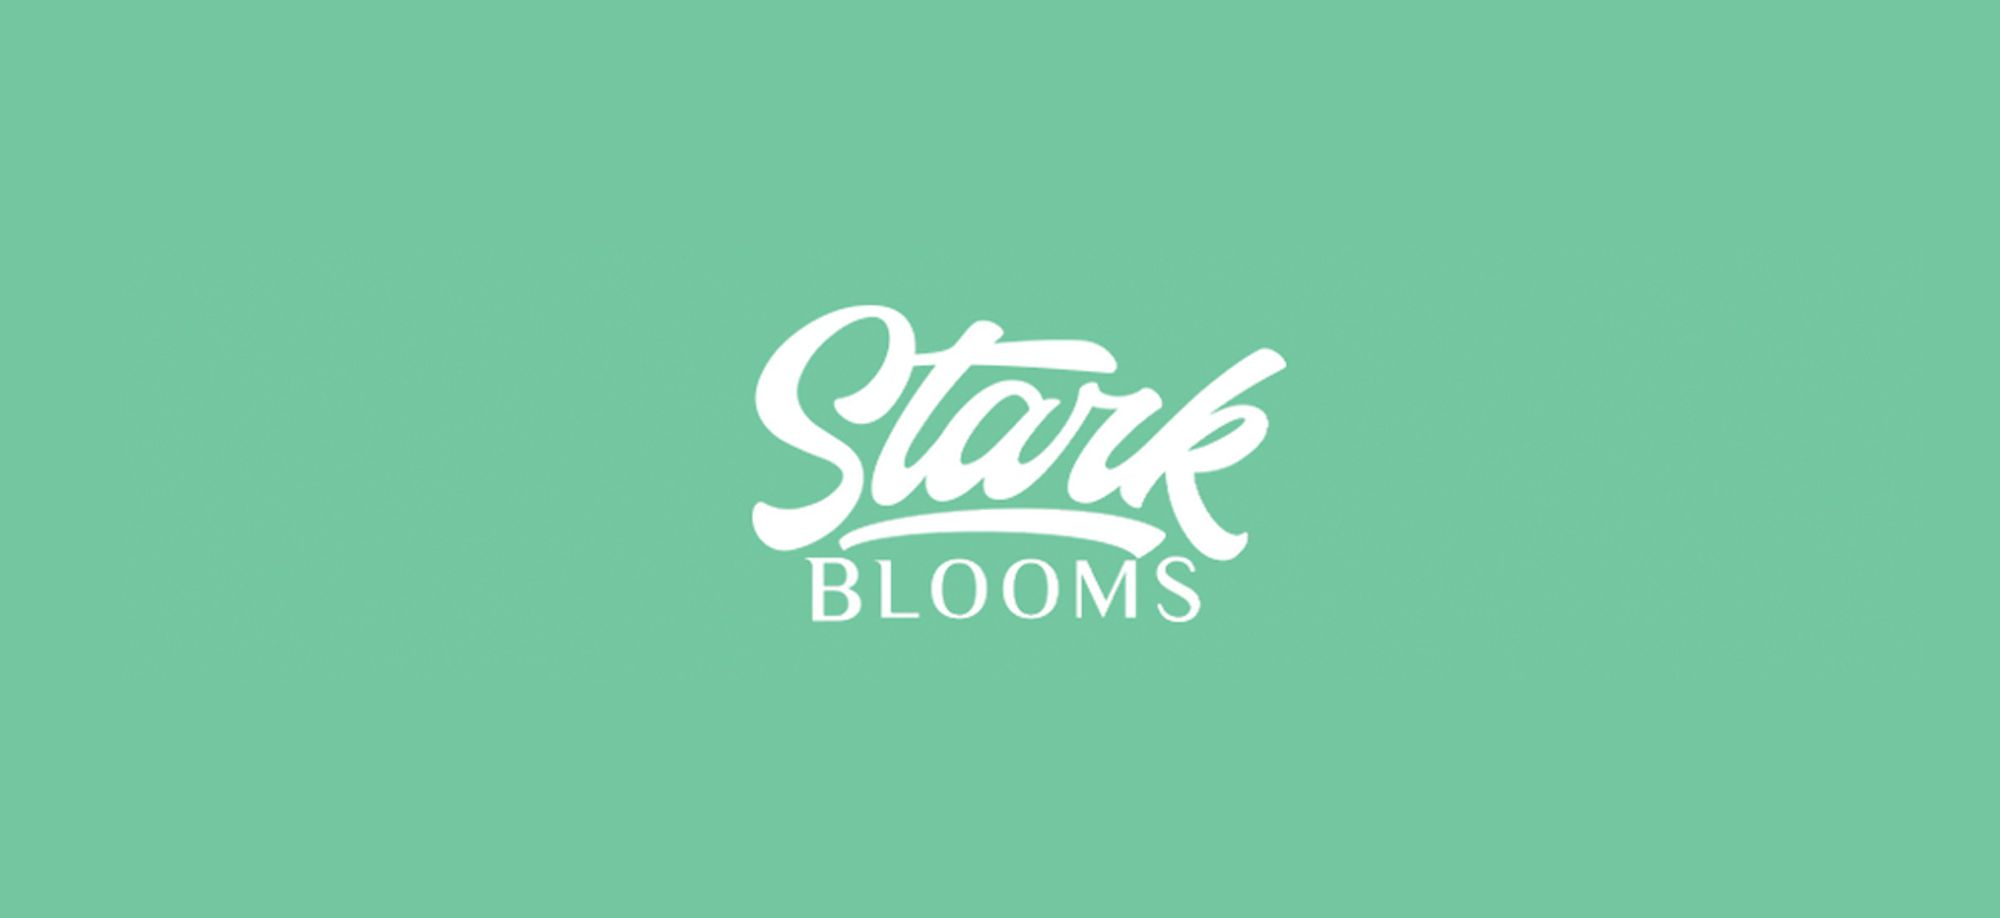 Stark Blooms